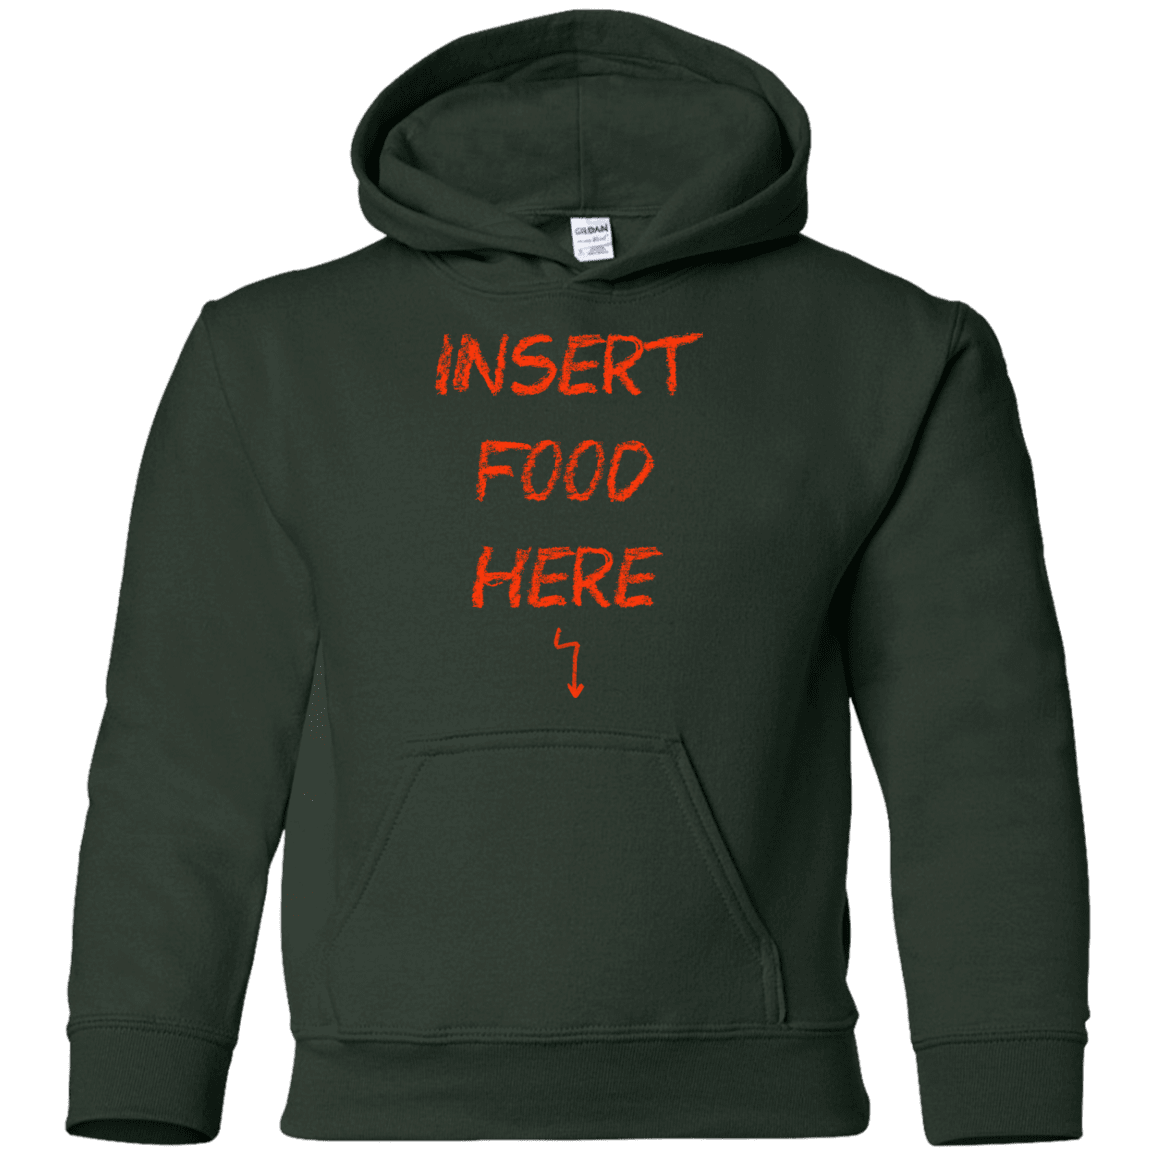 Sweatshirts Forest Green / YS Insert Food Youth Hoodie